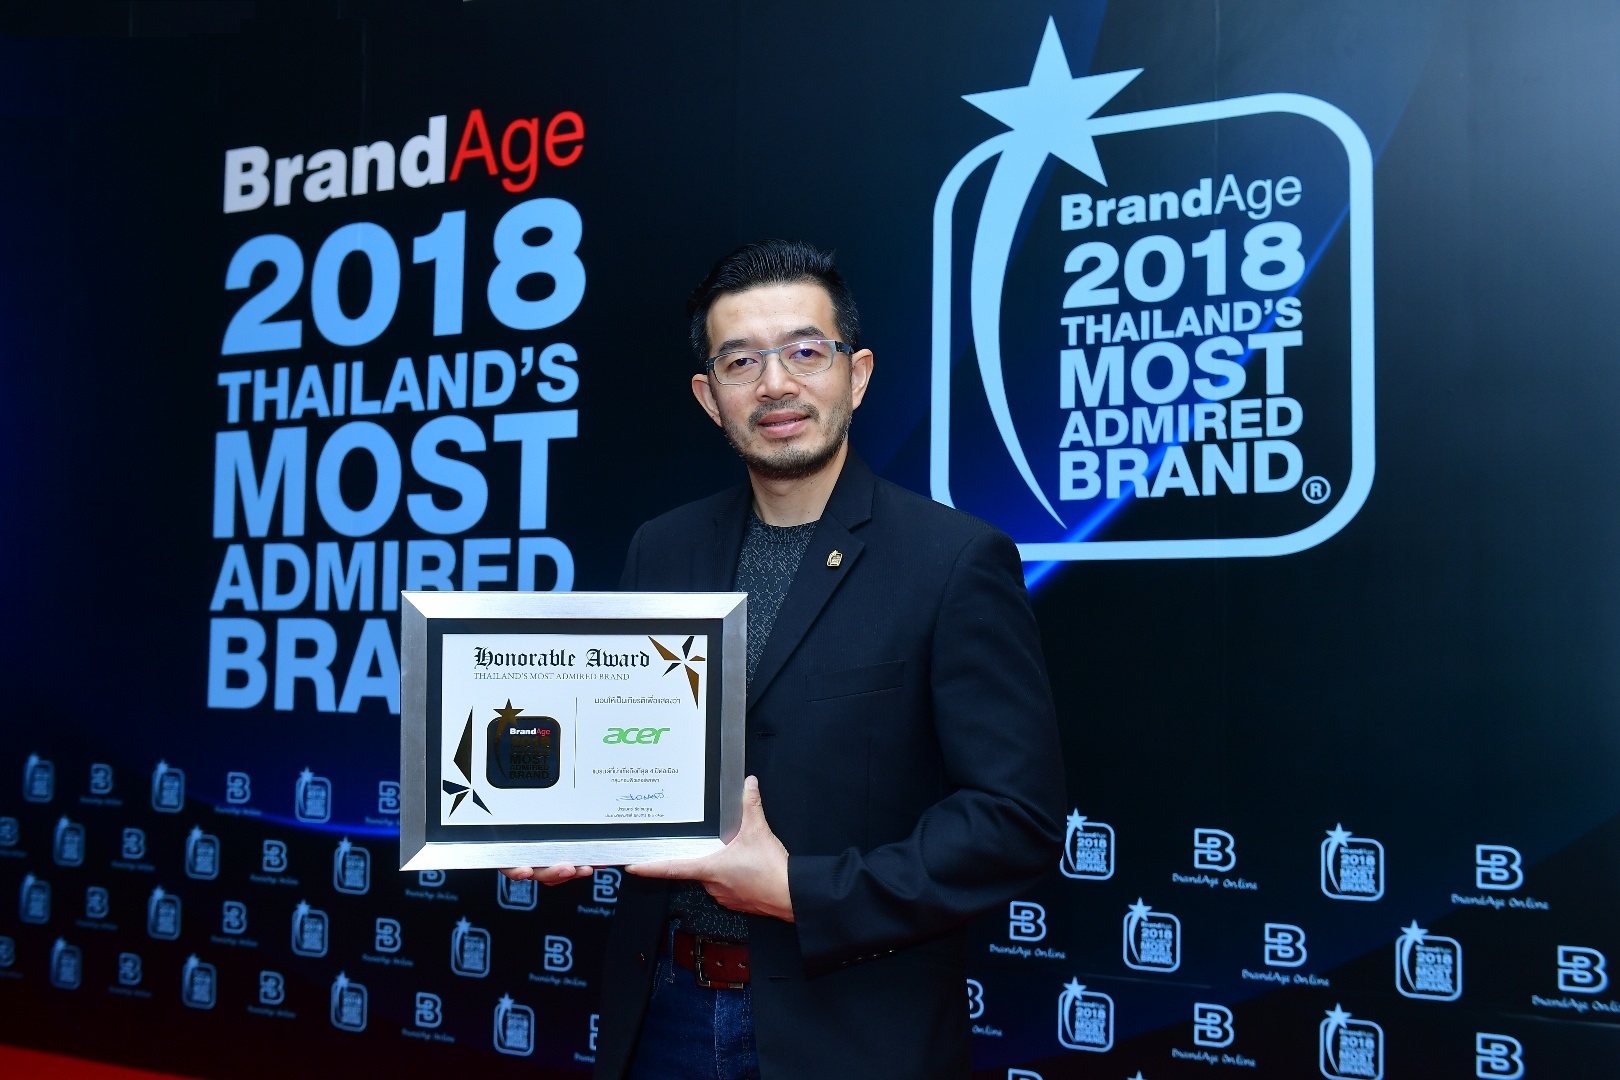 arr 0134 re2 เอเซอร์ ตอกย้ำแบรนด์ที่ได้รับความไว้วางใจจากผู้บริโภค คว้ารางวัล “Thailand’s Most Admired Brand 2018” ติดต่อกันเป็นปีที่ 8